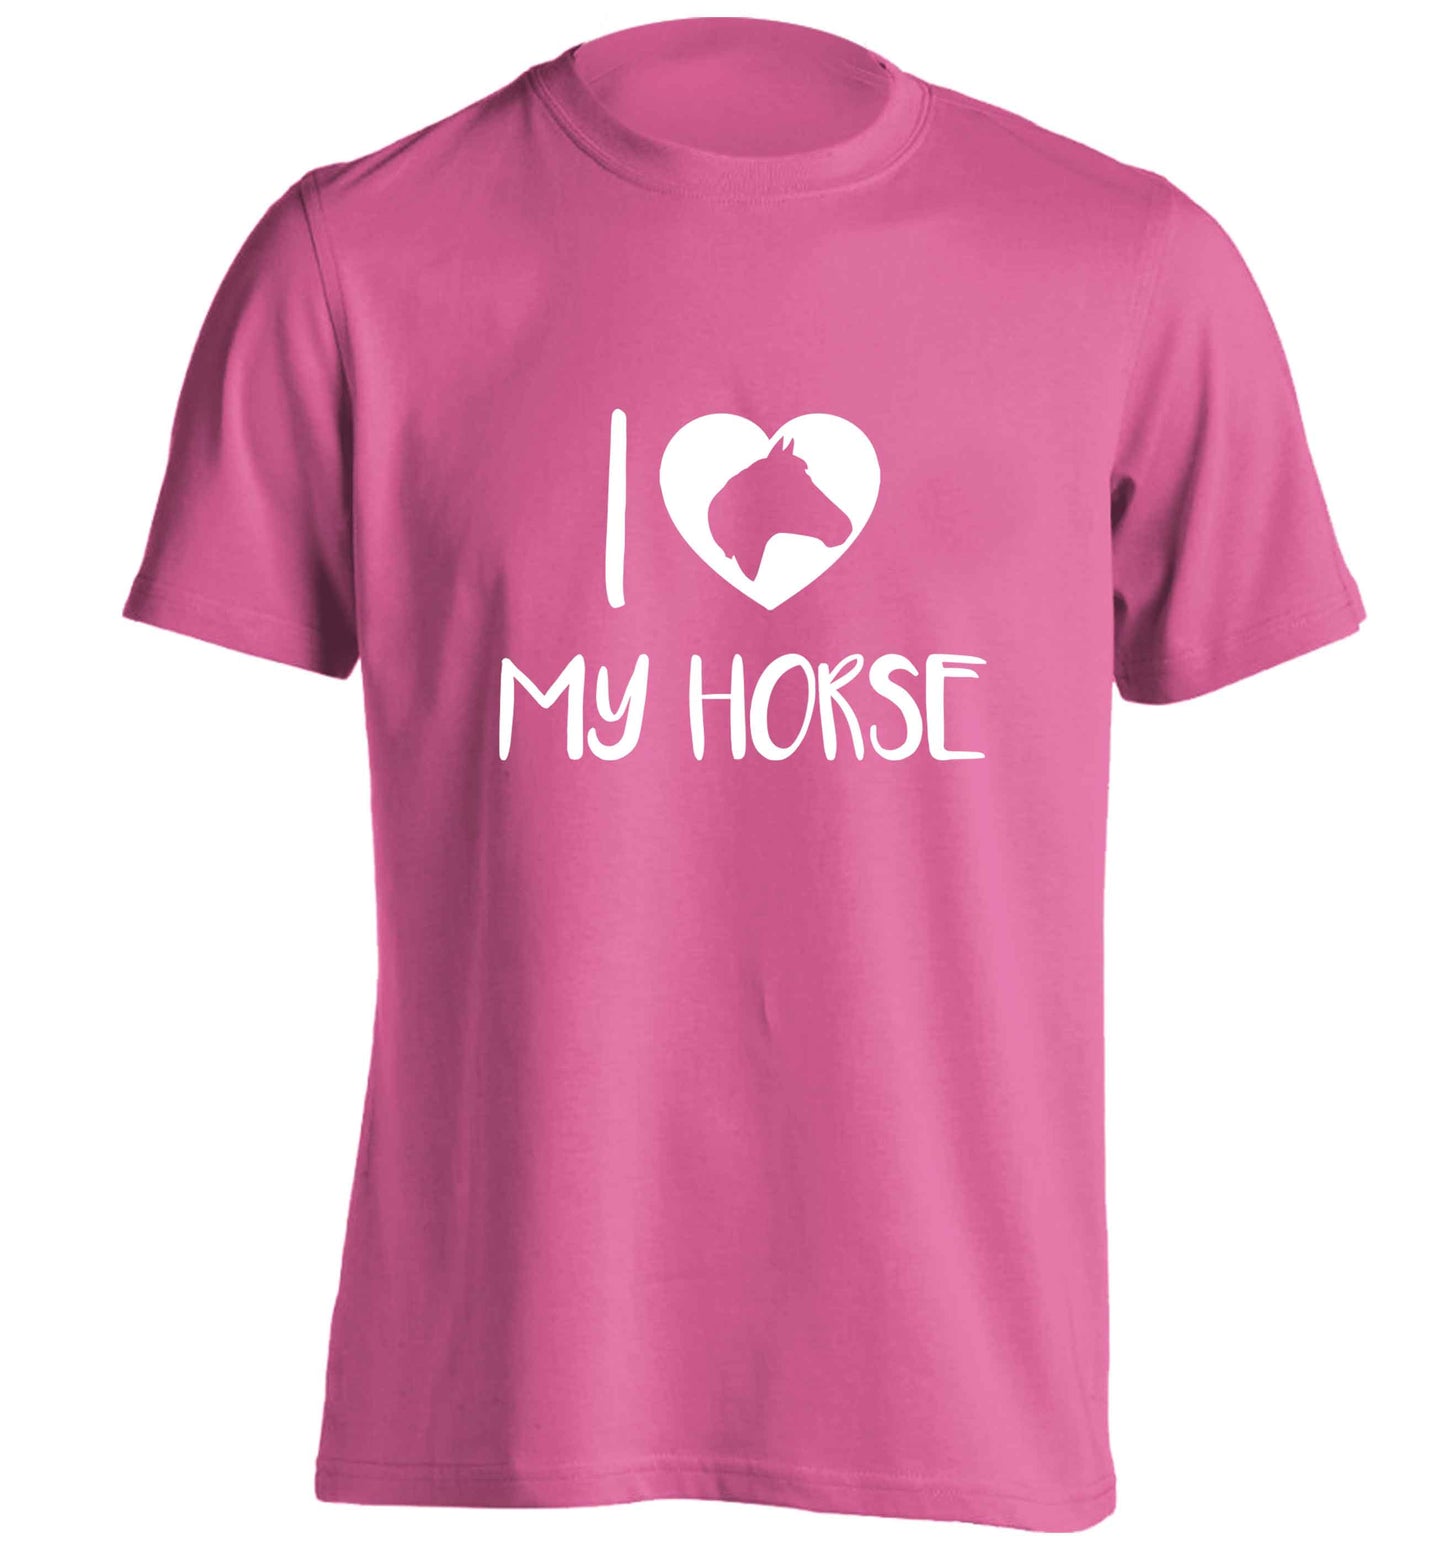 I love my horse adults unisex pink Tshirt 2XL